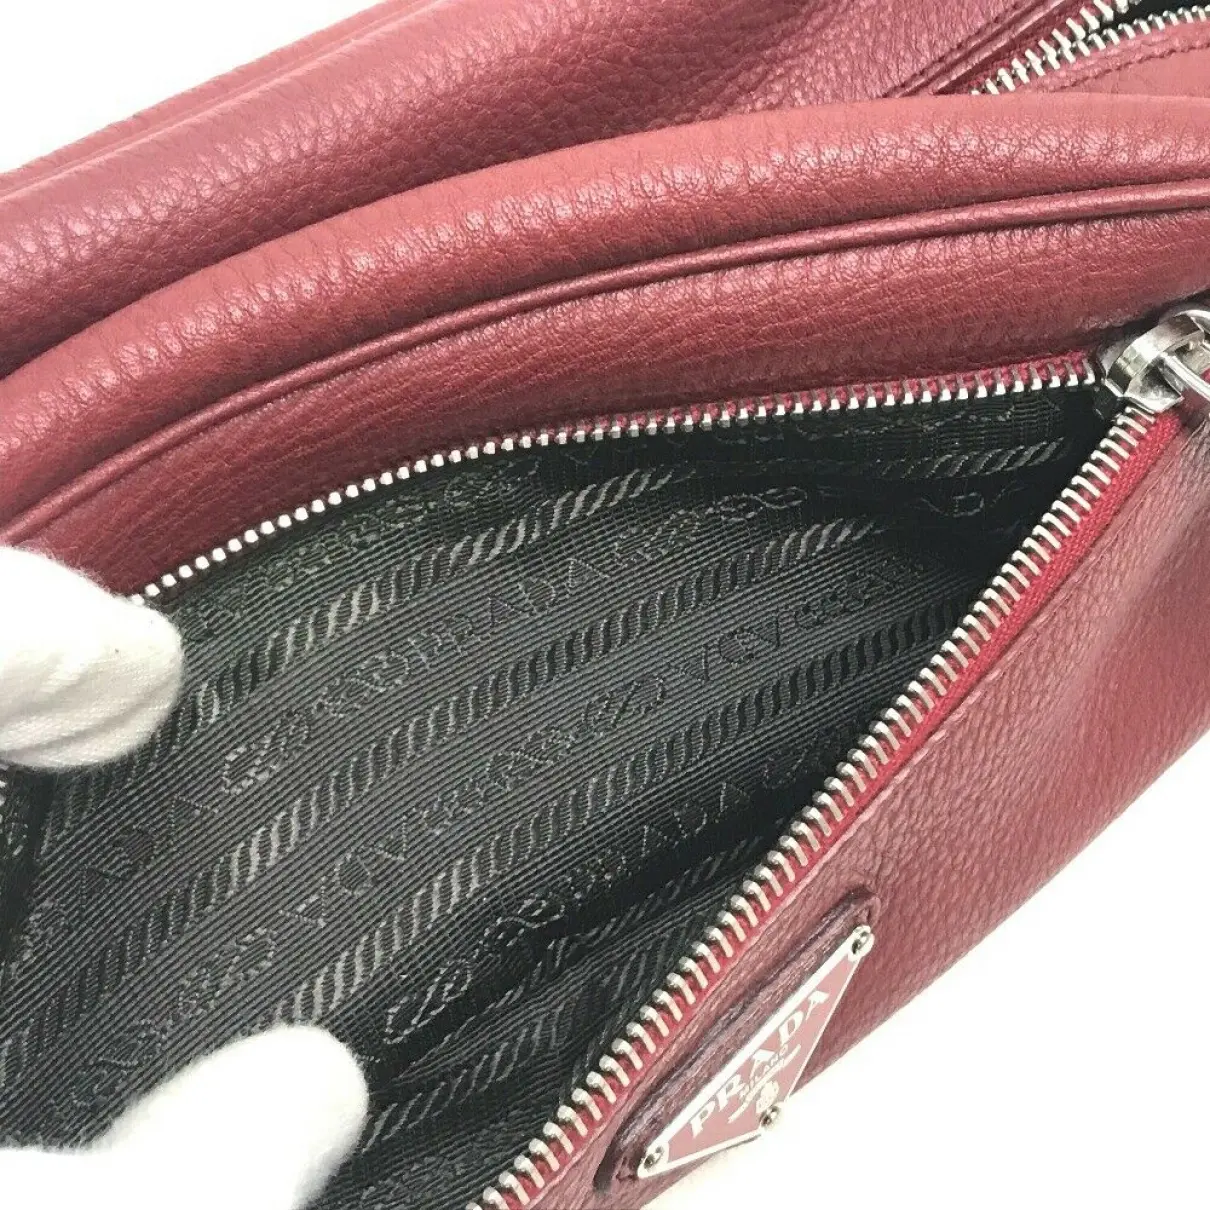 Leather travel bag Prada